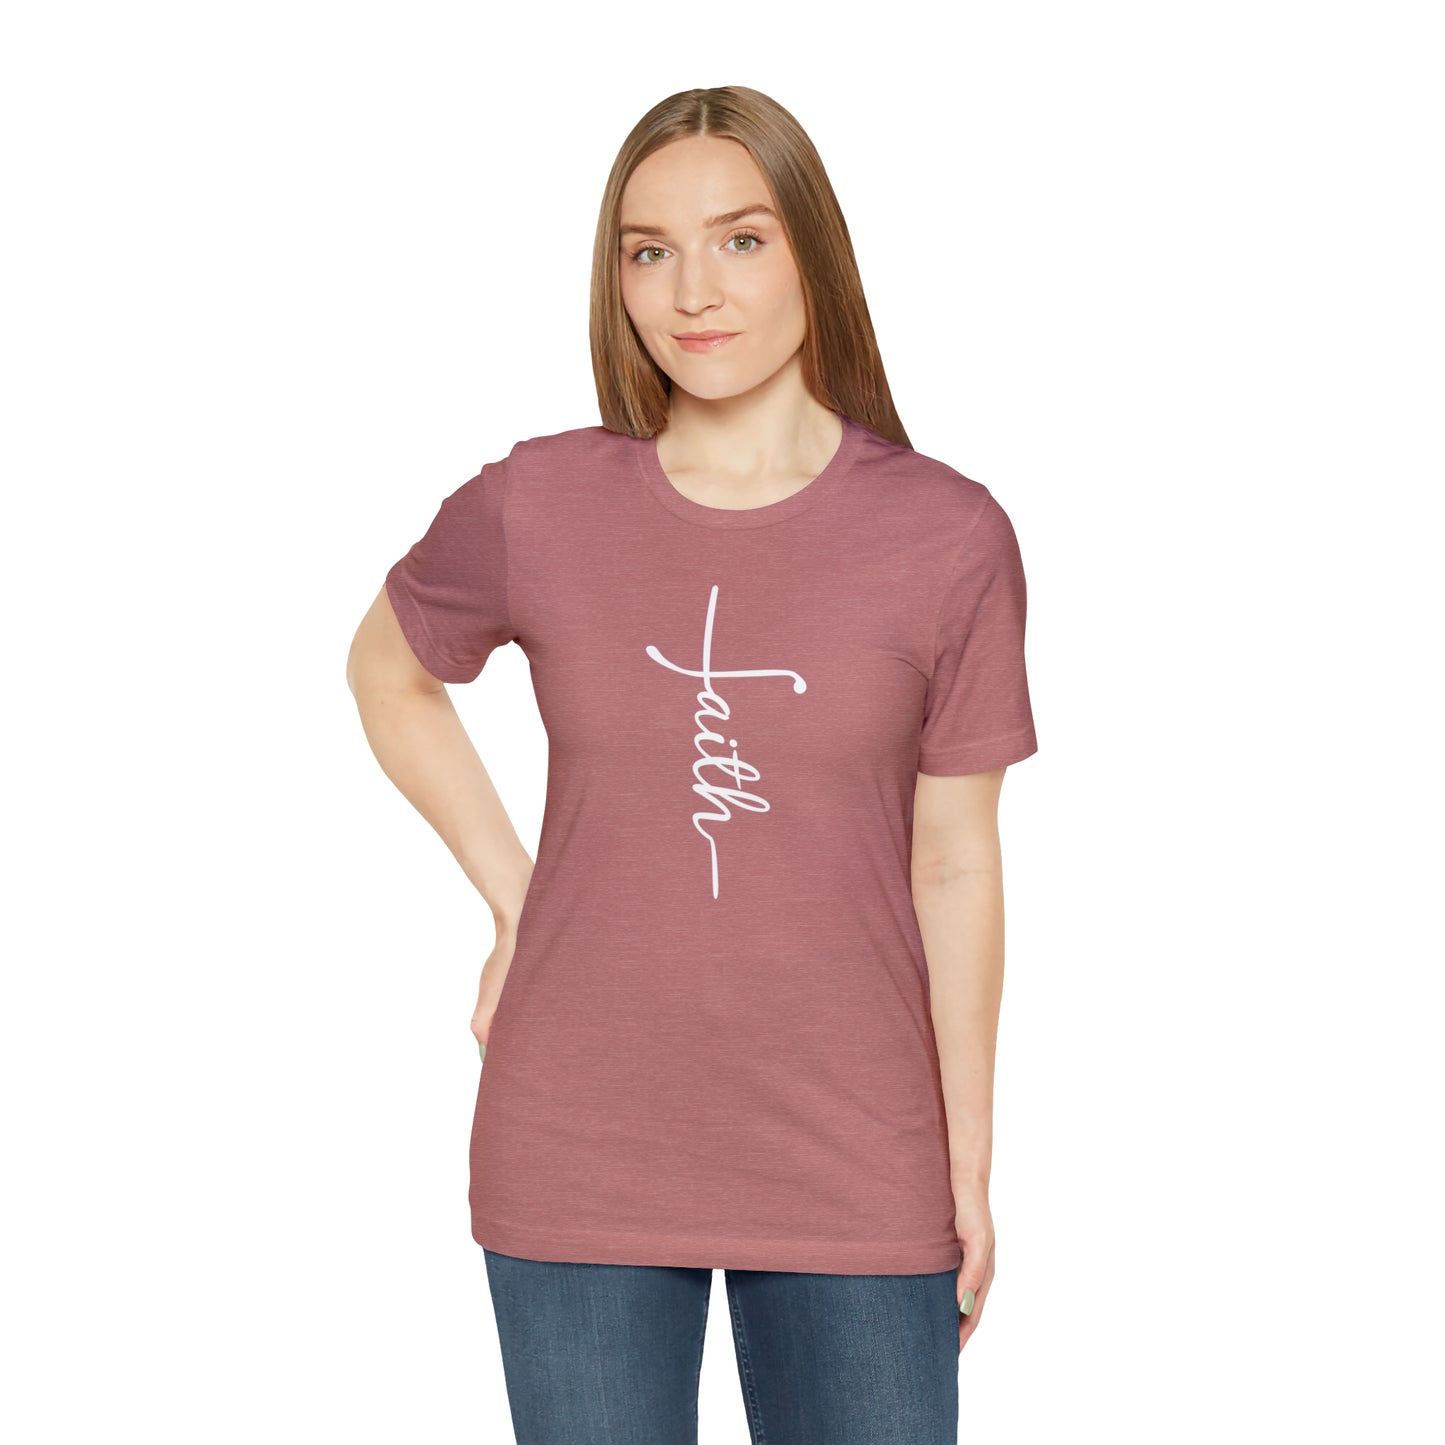 Faith T-Shirt, Unisex Jersey Short Sleeve Tee